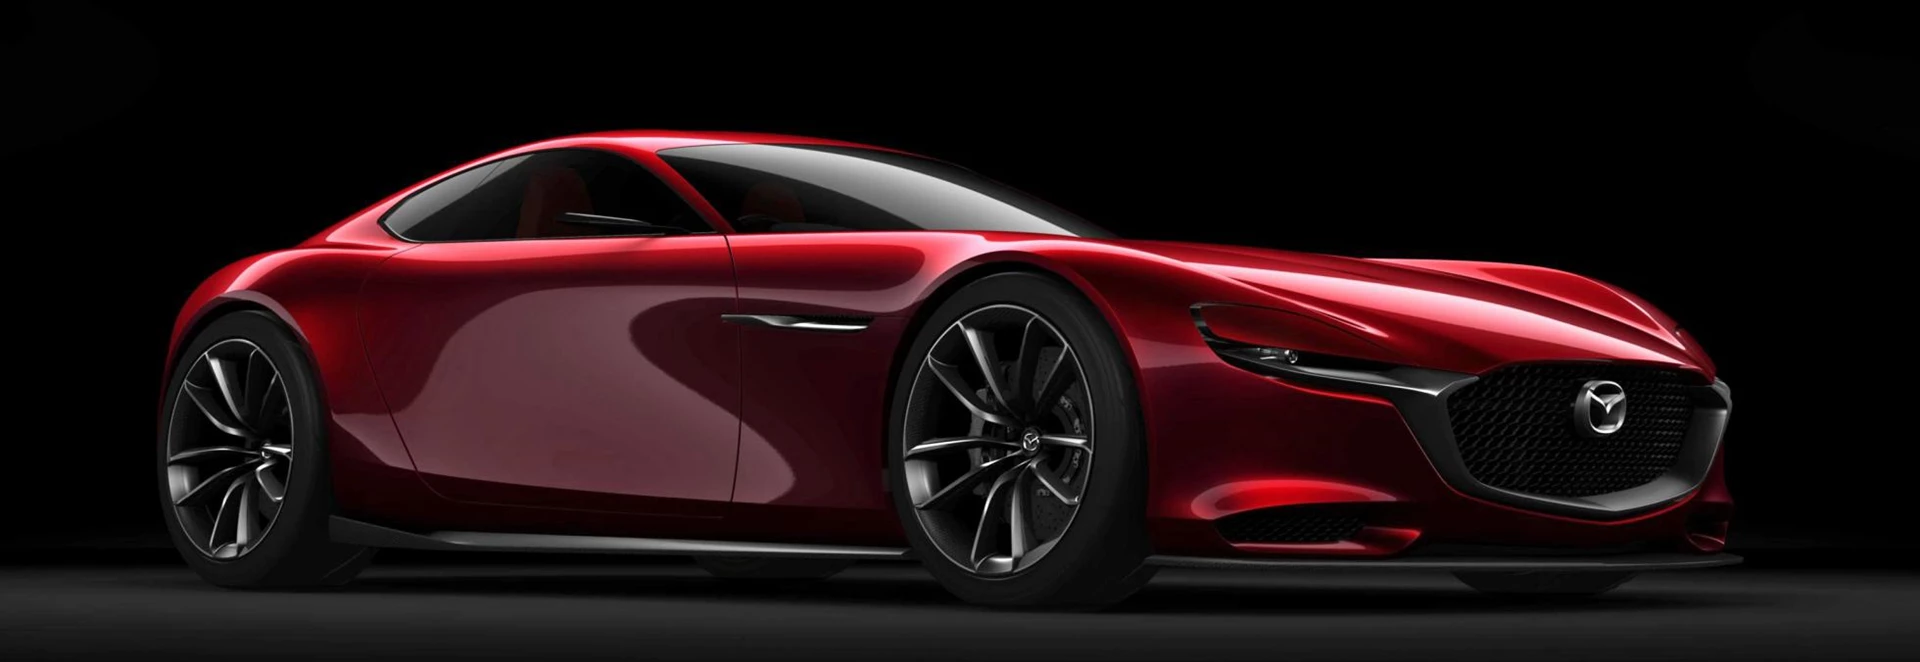 Mazda RX-Vision sports car concept unmasked